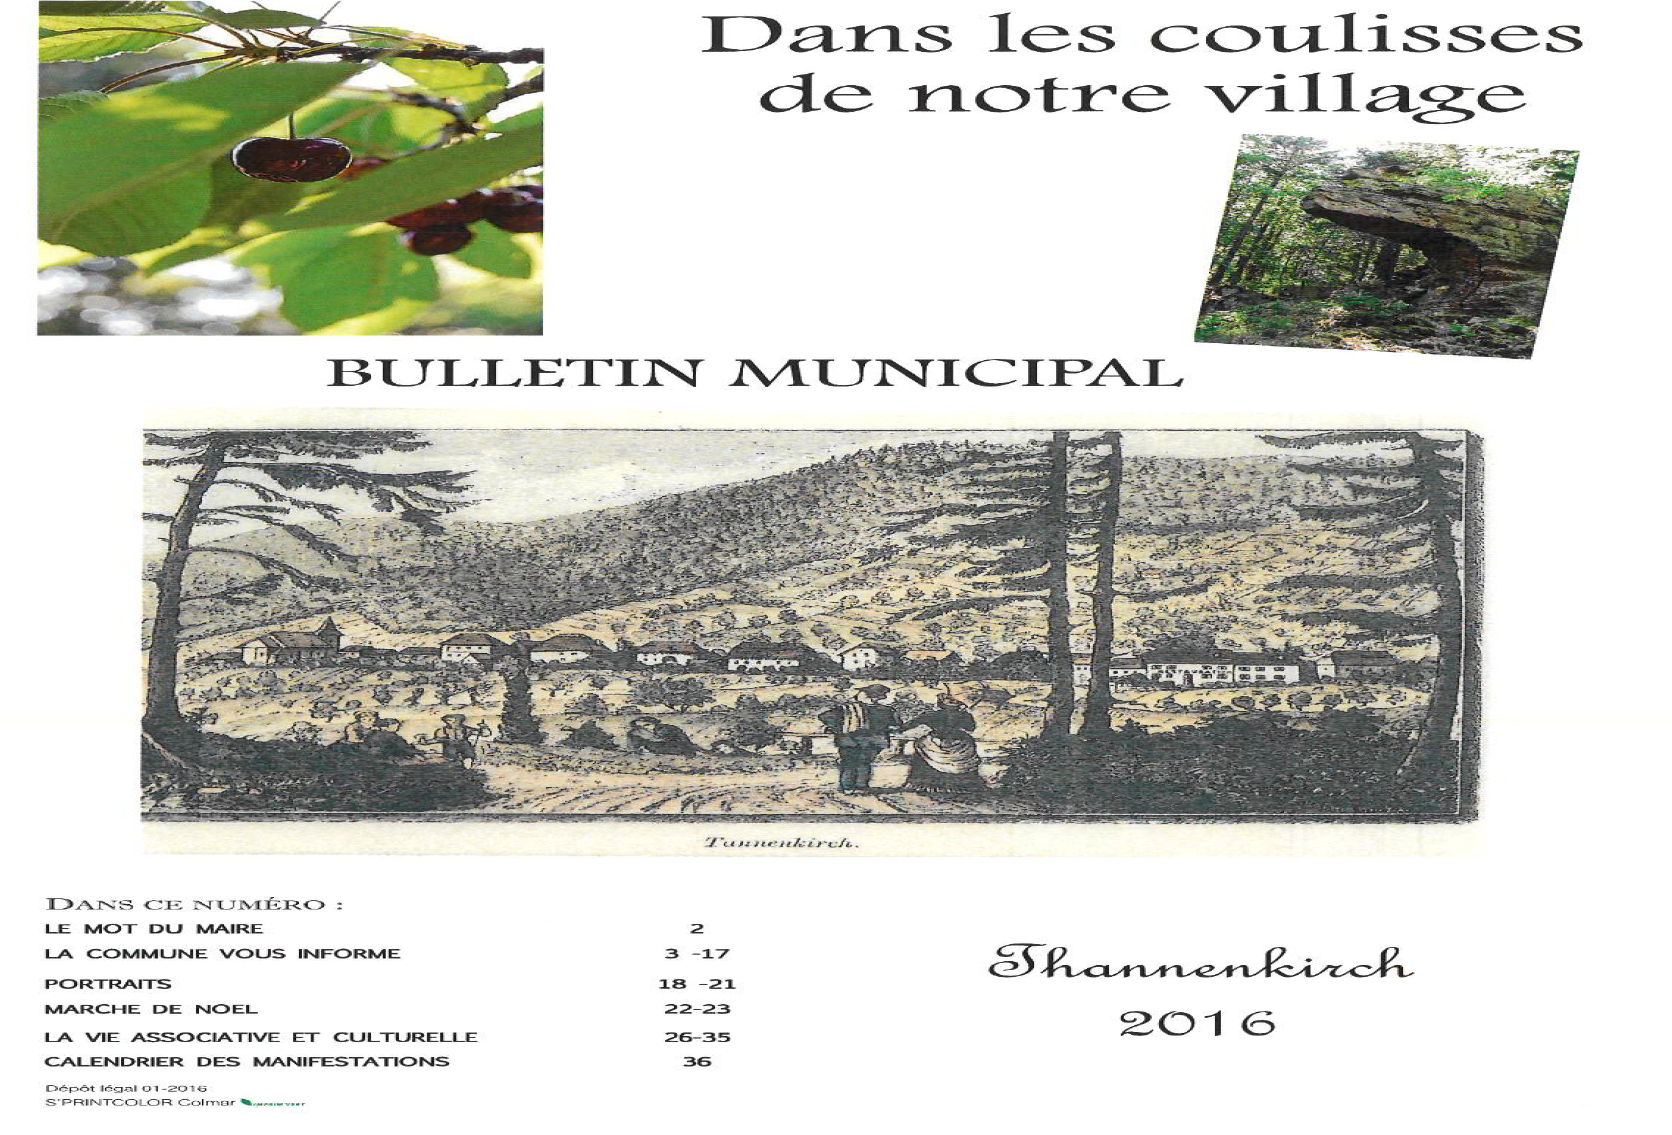 Bulletin municipal 2016.png